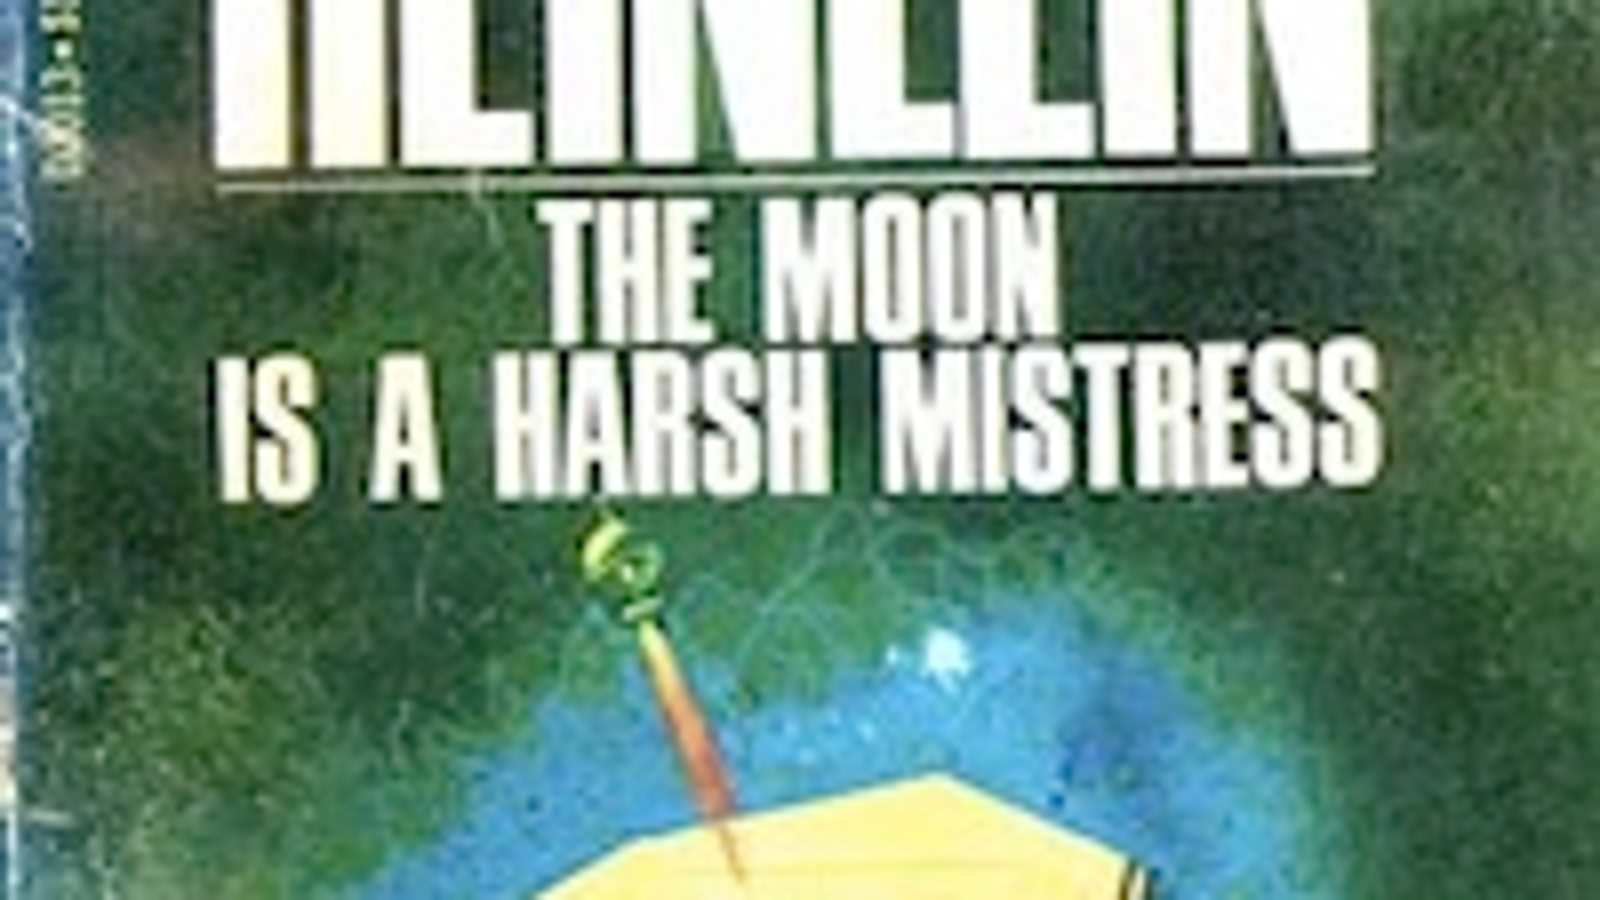 the moon is a harsh mistress by robert heinlein